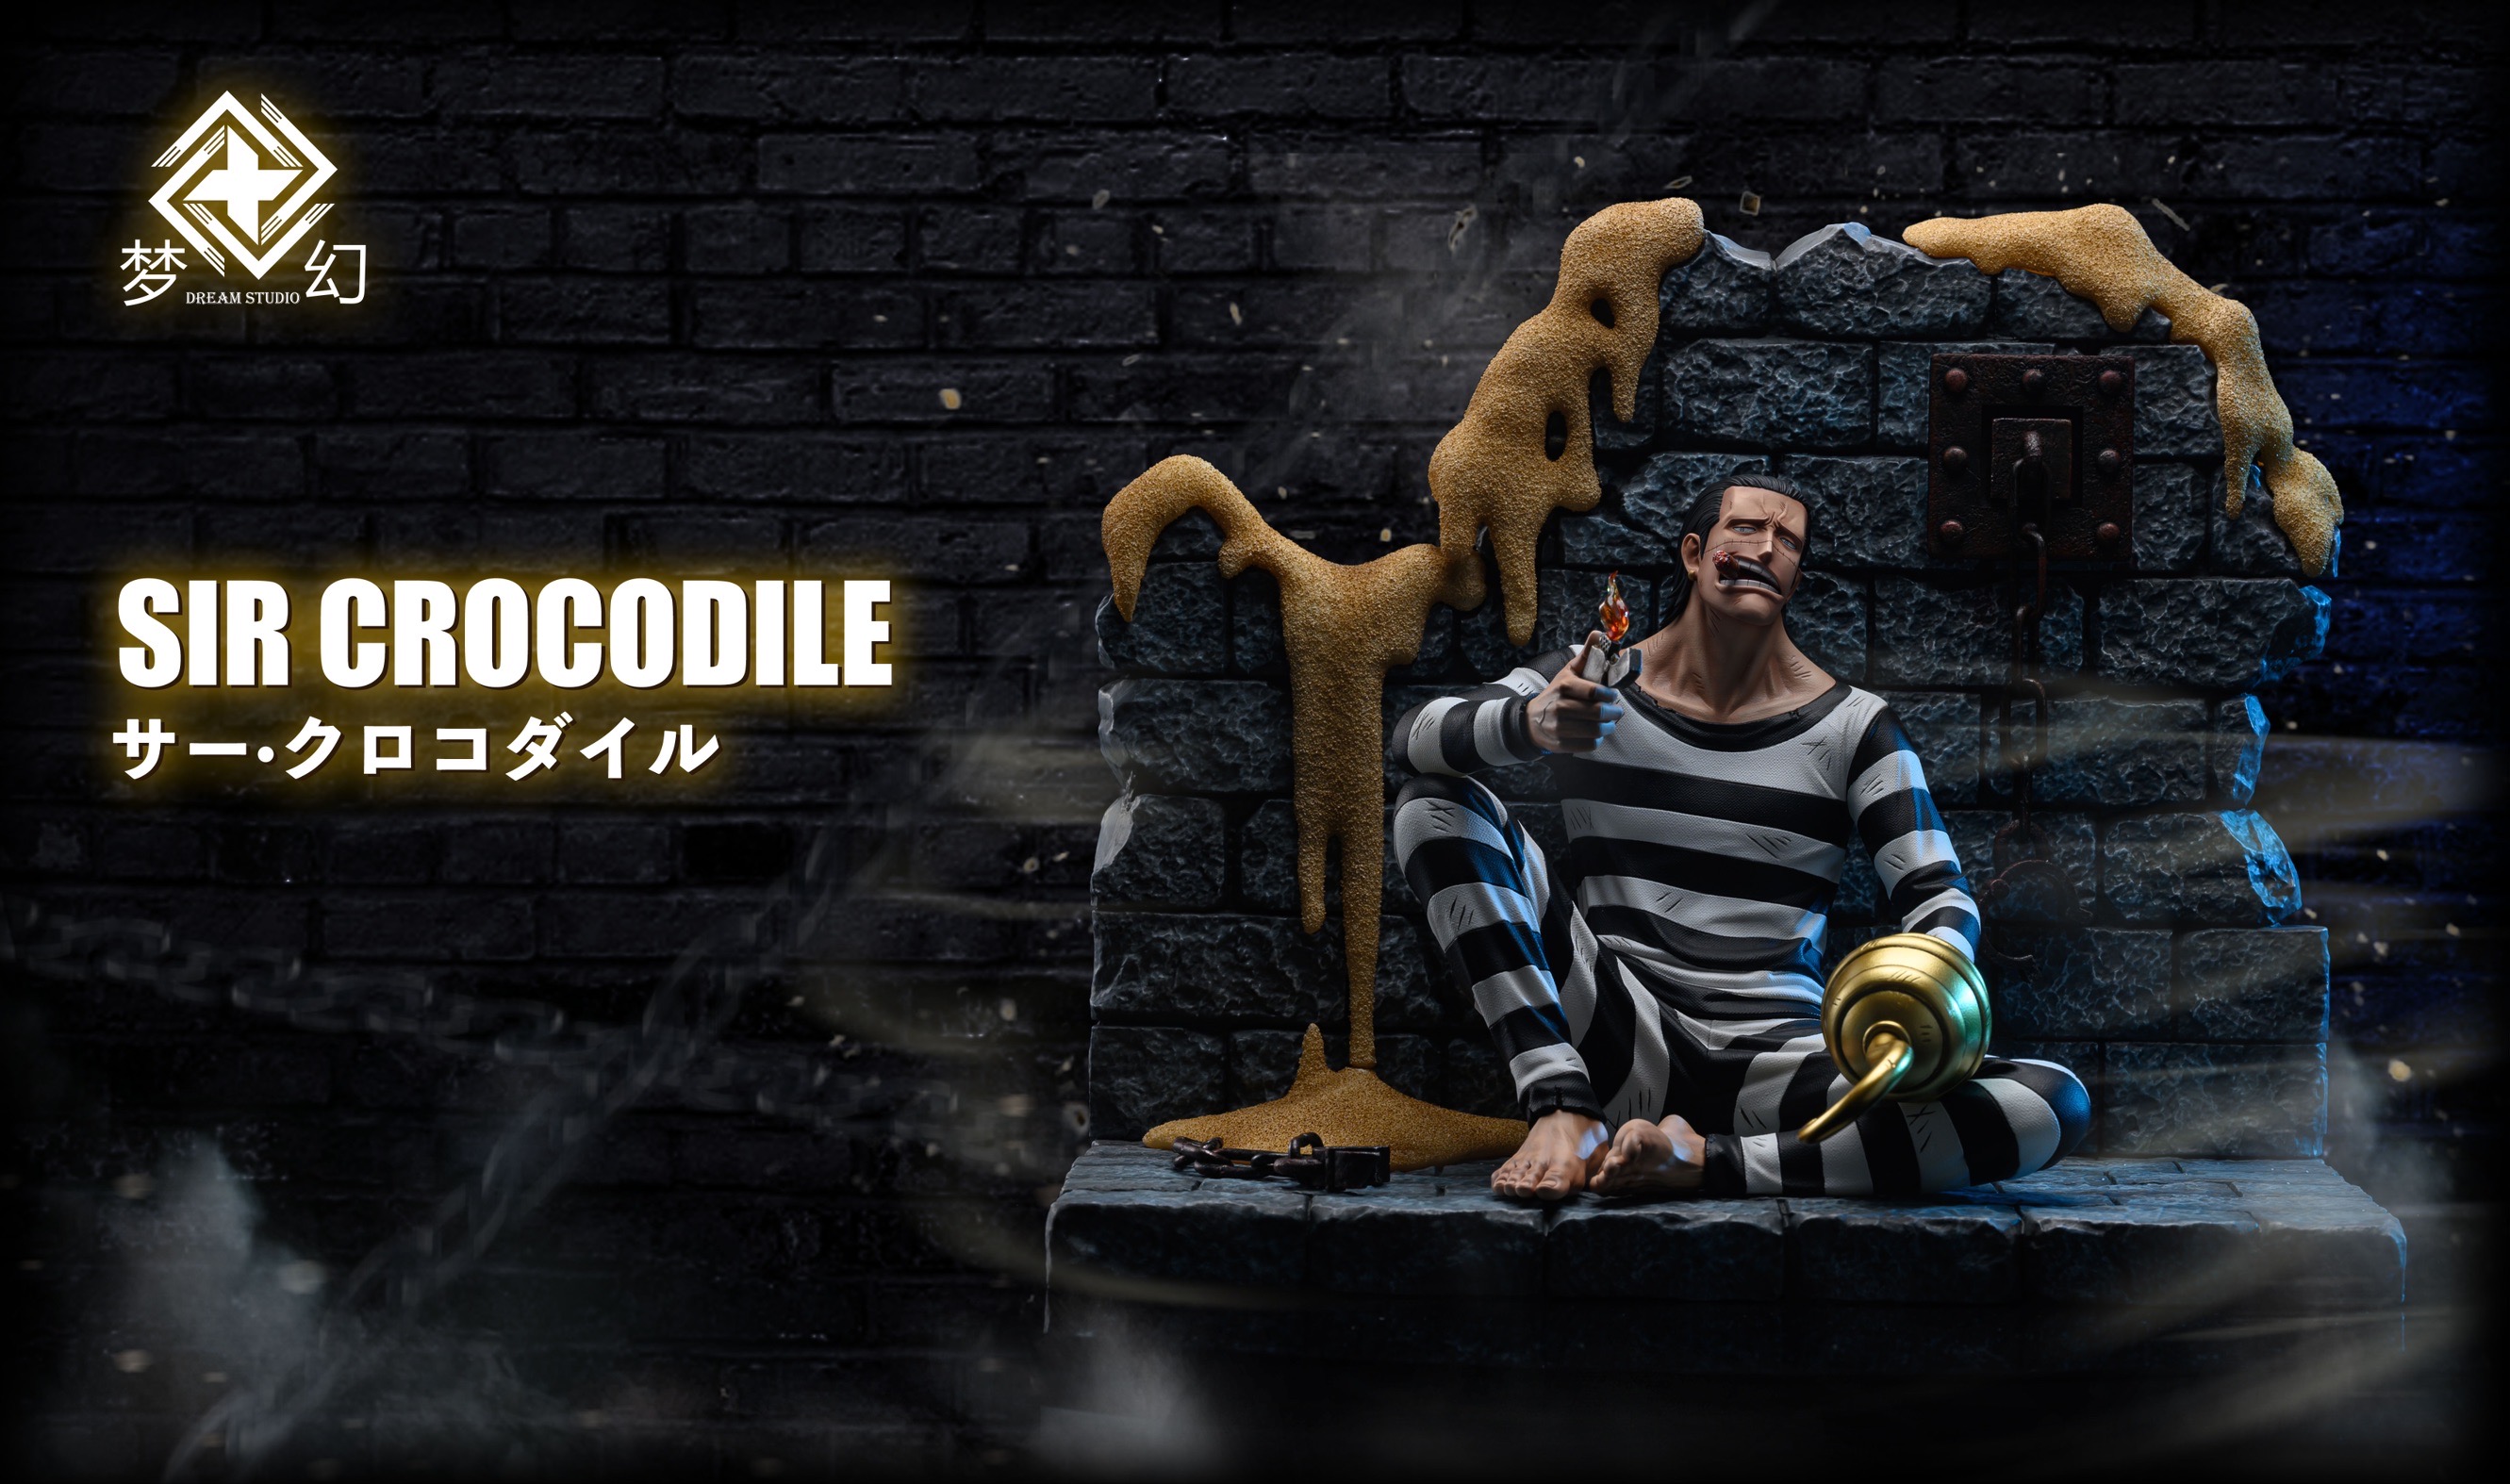 Crocodile “ Mr.0 “ Prisoner คนคุก by Dream Studio (มัดจำ)